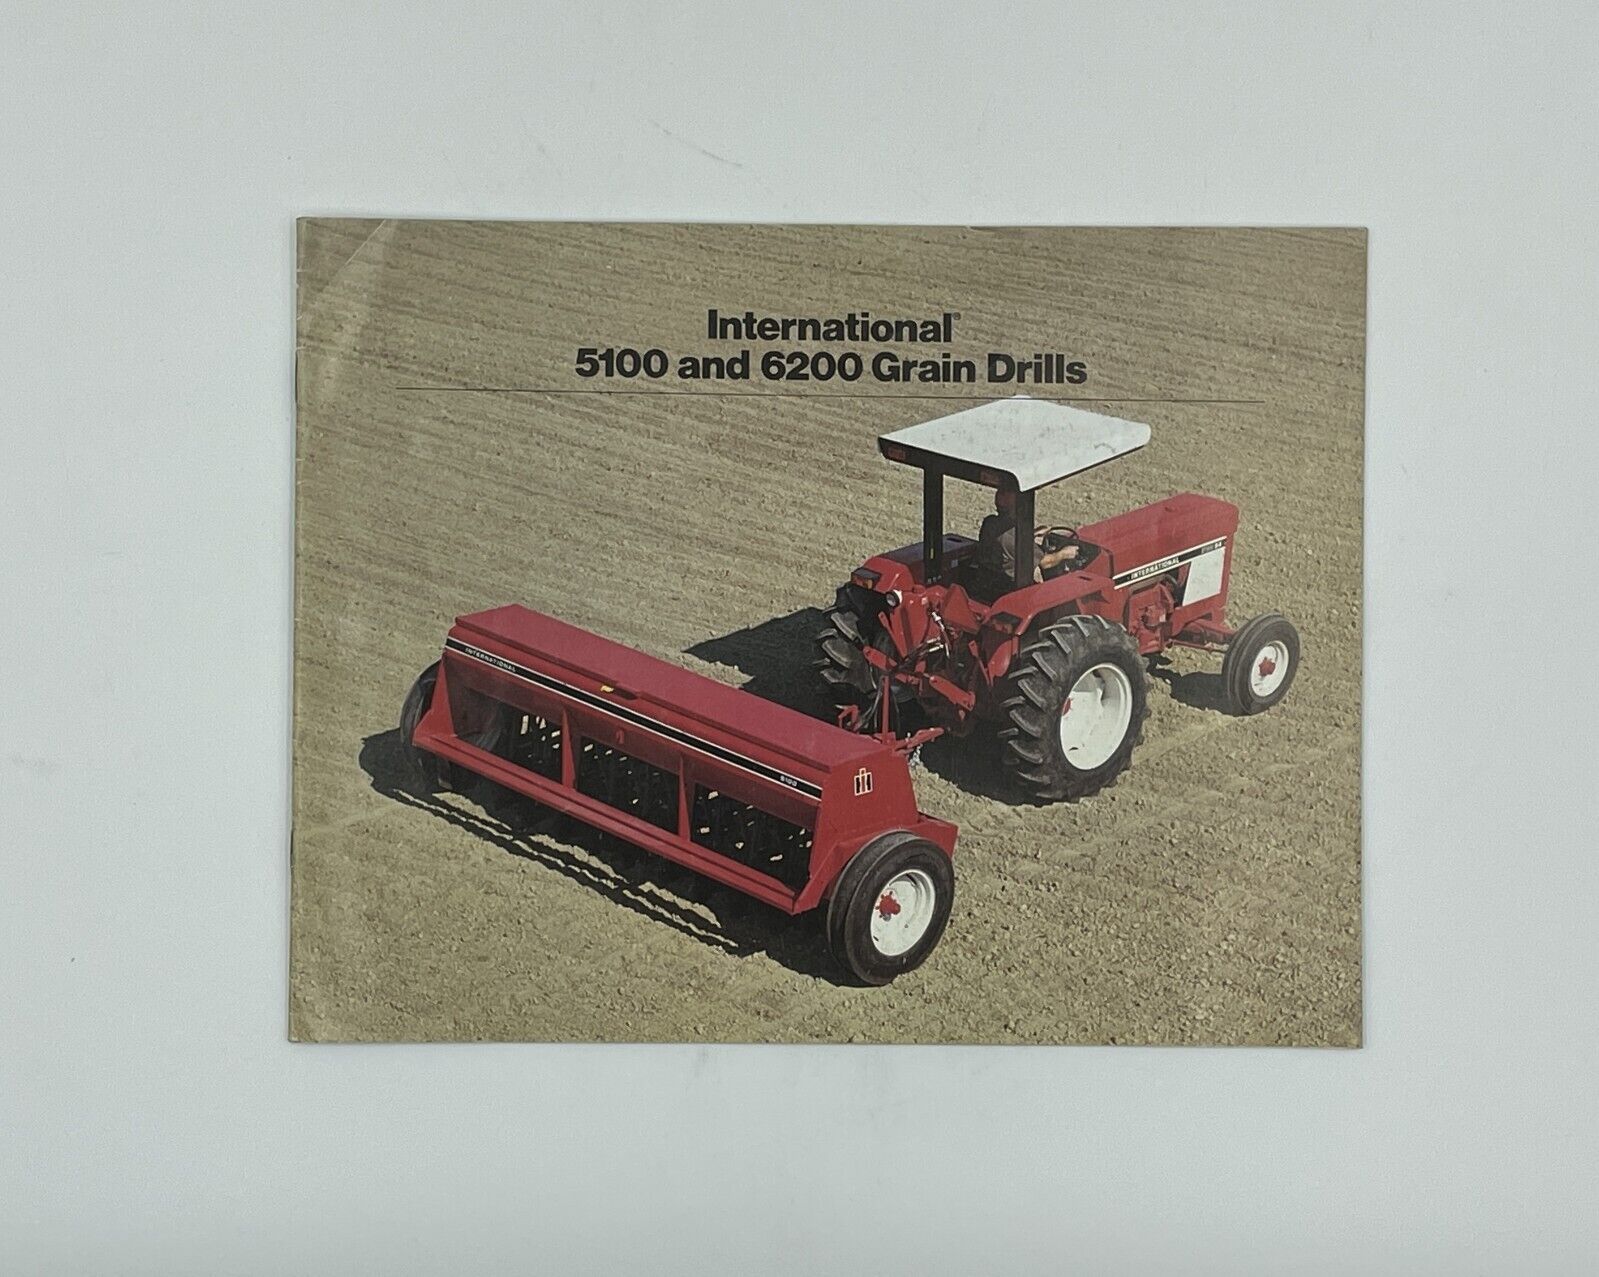 Case IH Sales Literature Brochure Advertising 5100 and 6200 Grain Drills